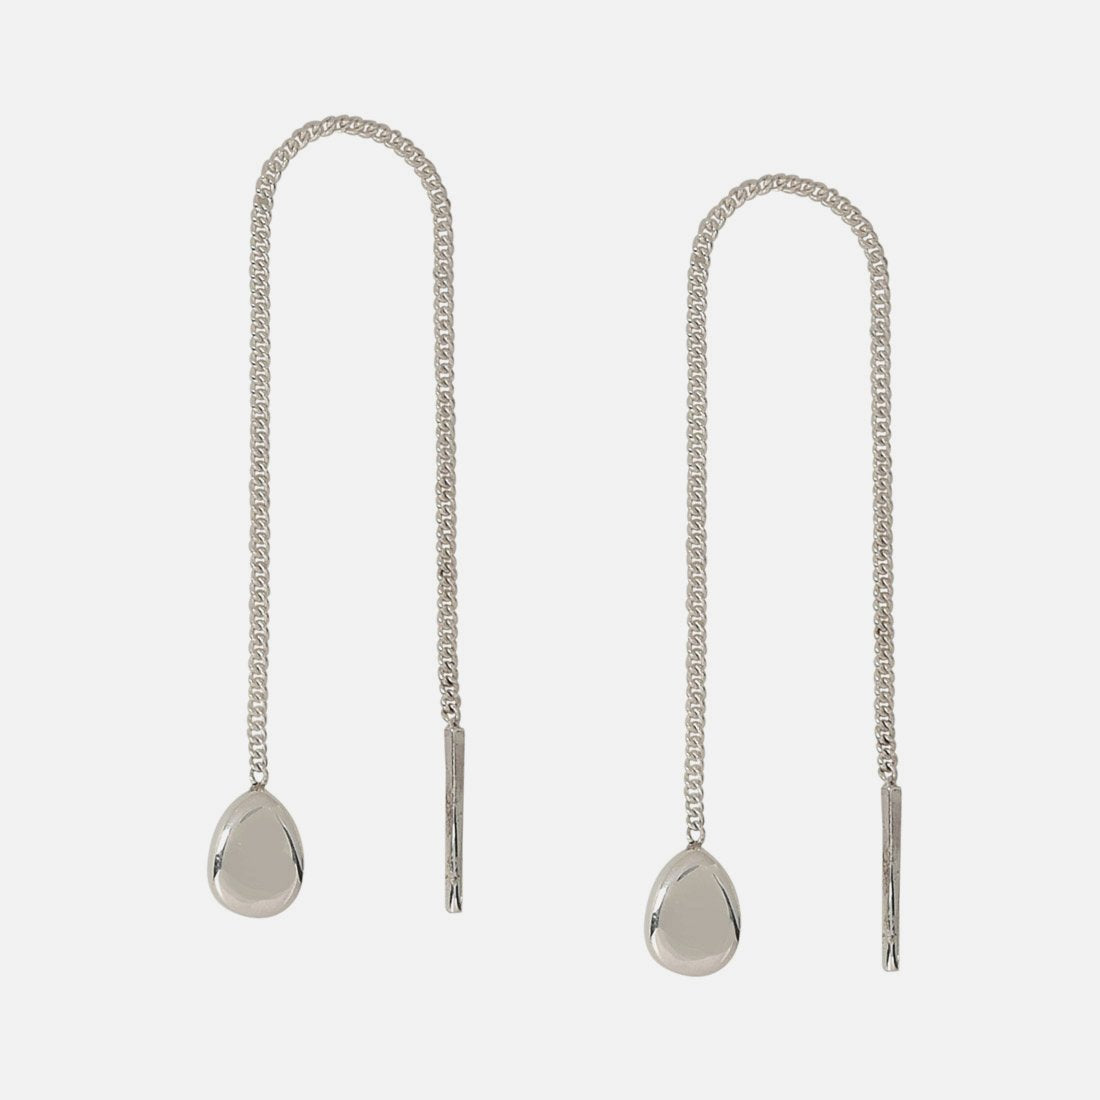 Balanced Sterling Silver Long Earrings - Chain